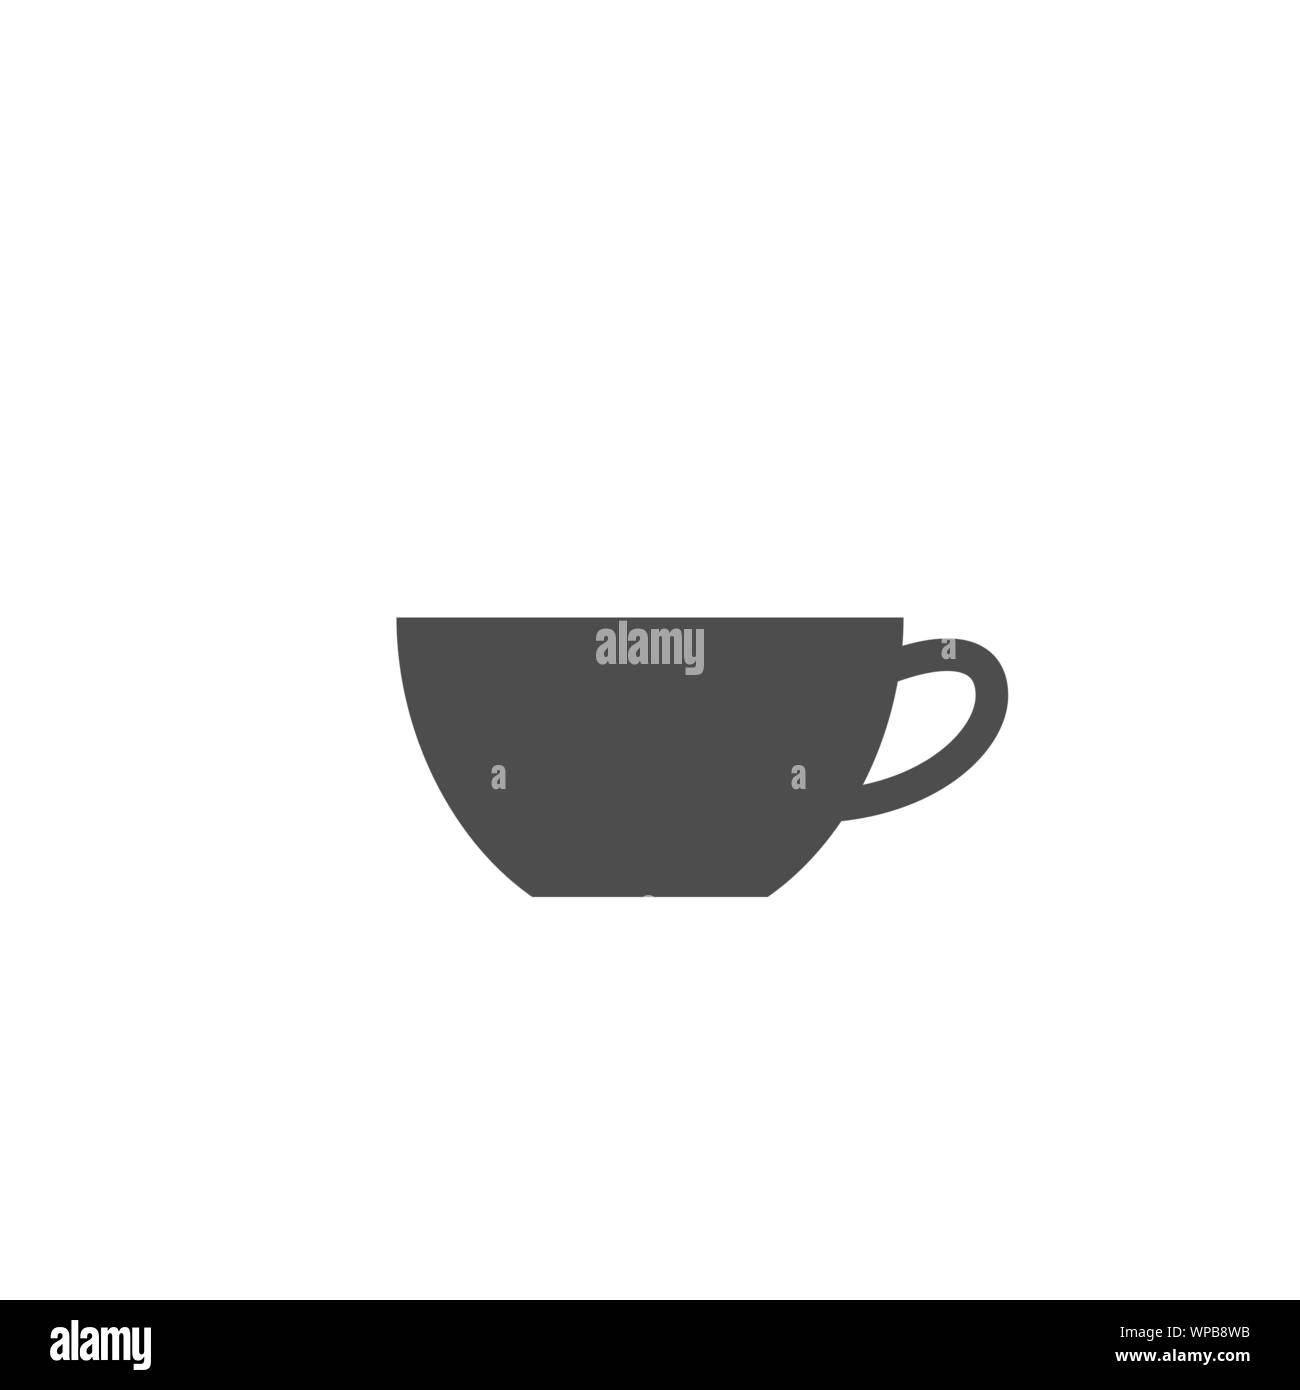 Tazza di tè o caffè. Illustrazione Vettoriale Illustrazione Vettoriale